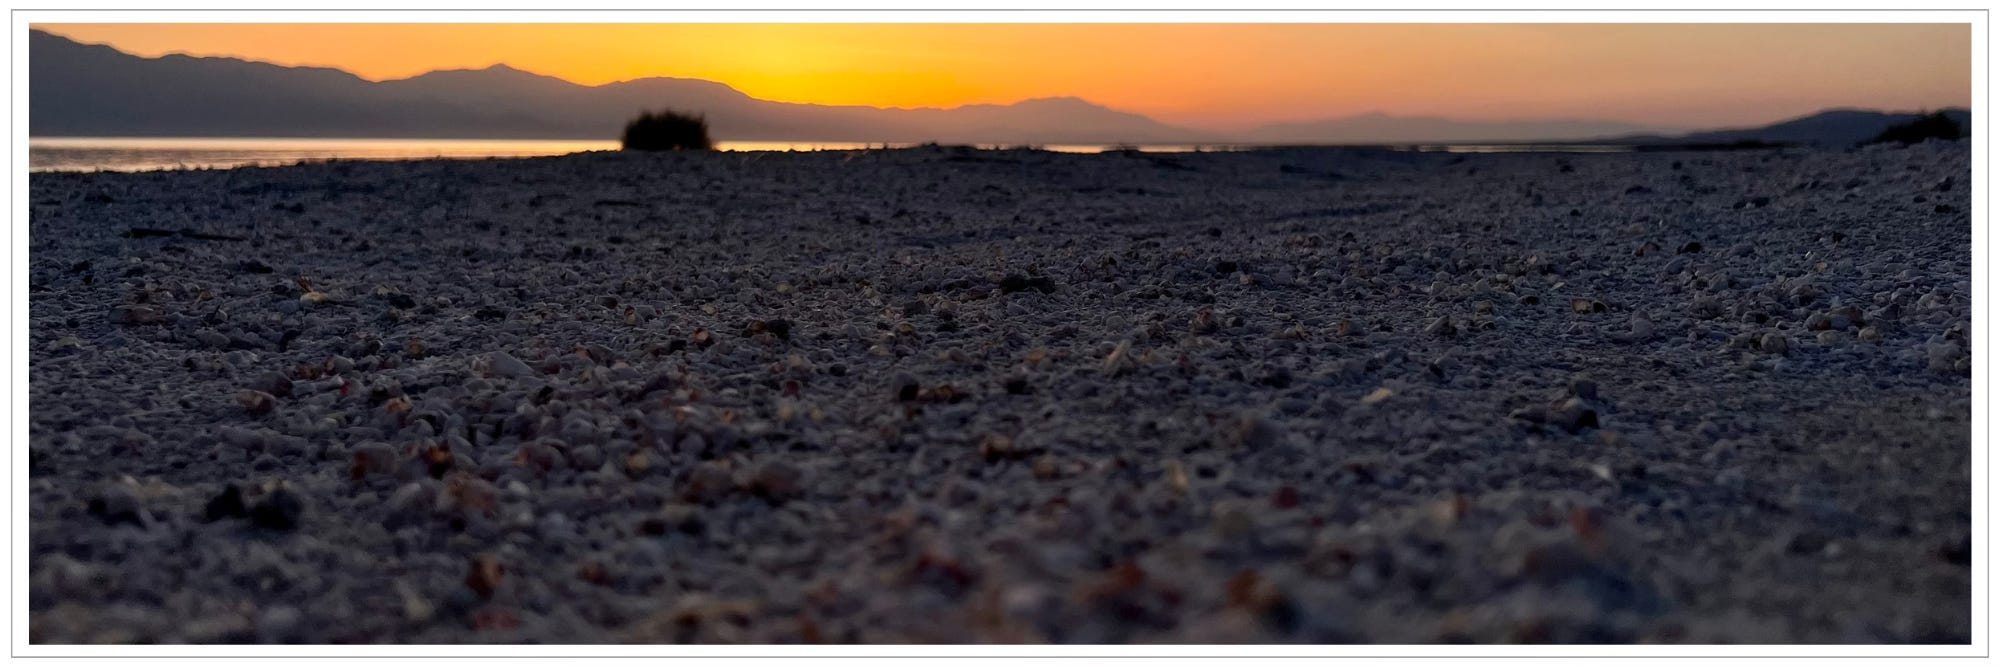 desolate shores, Salton Sea, sunset